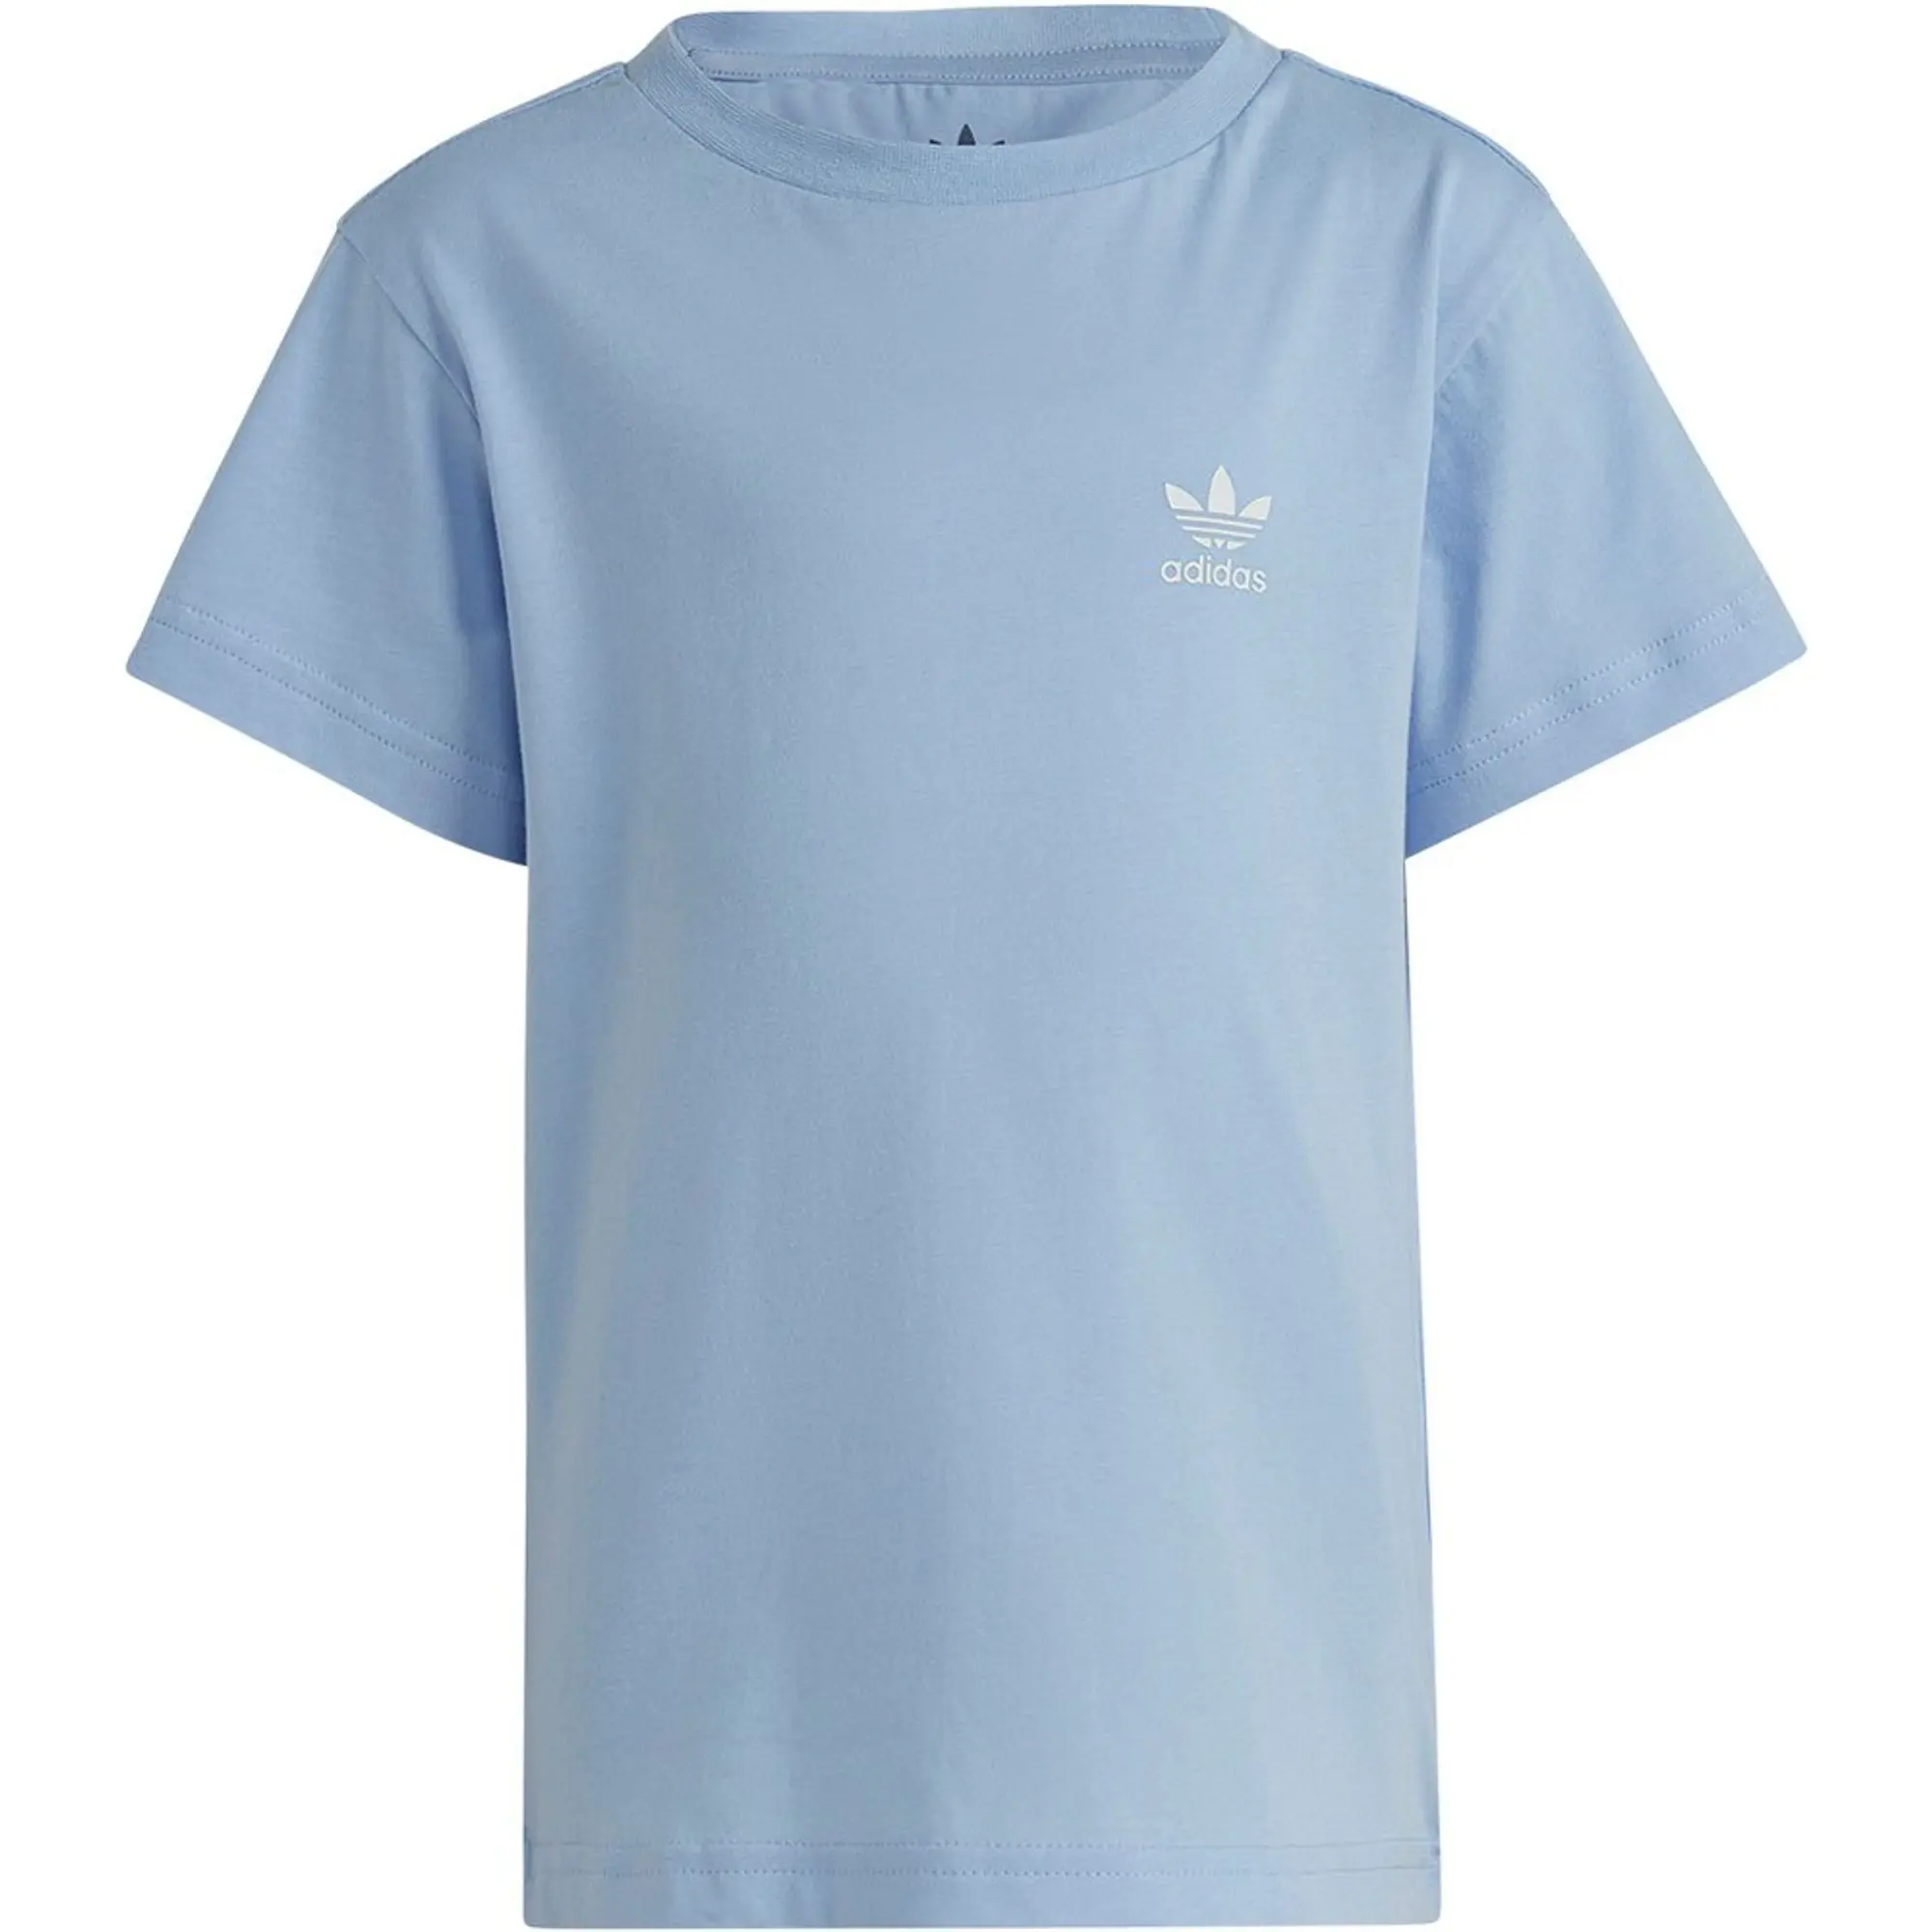 Adidas Originals Adicolor T-Shirt - Kids Blue | IB9905